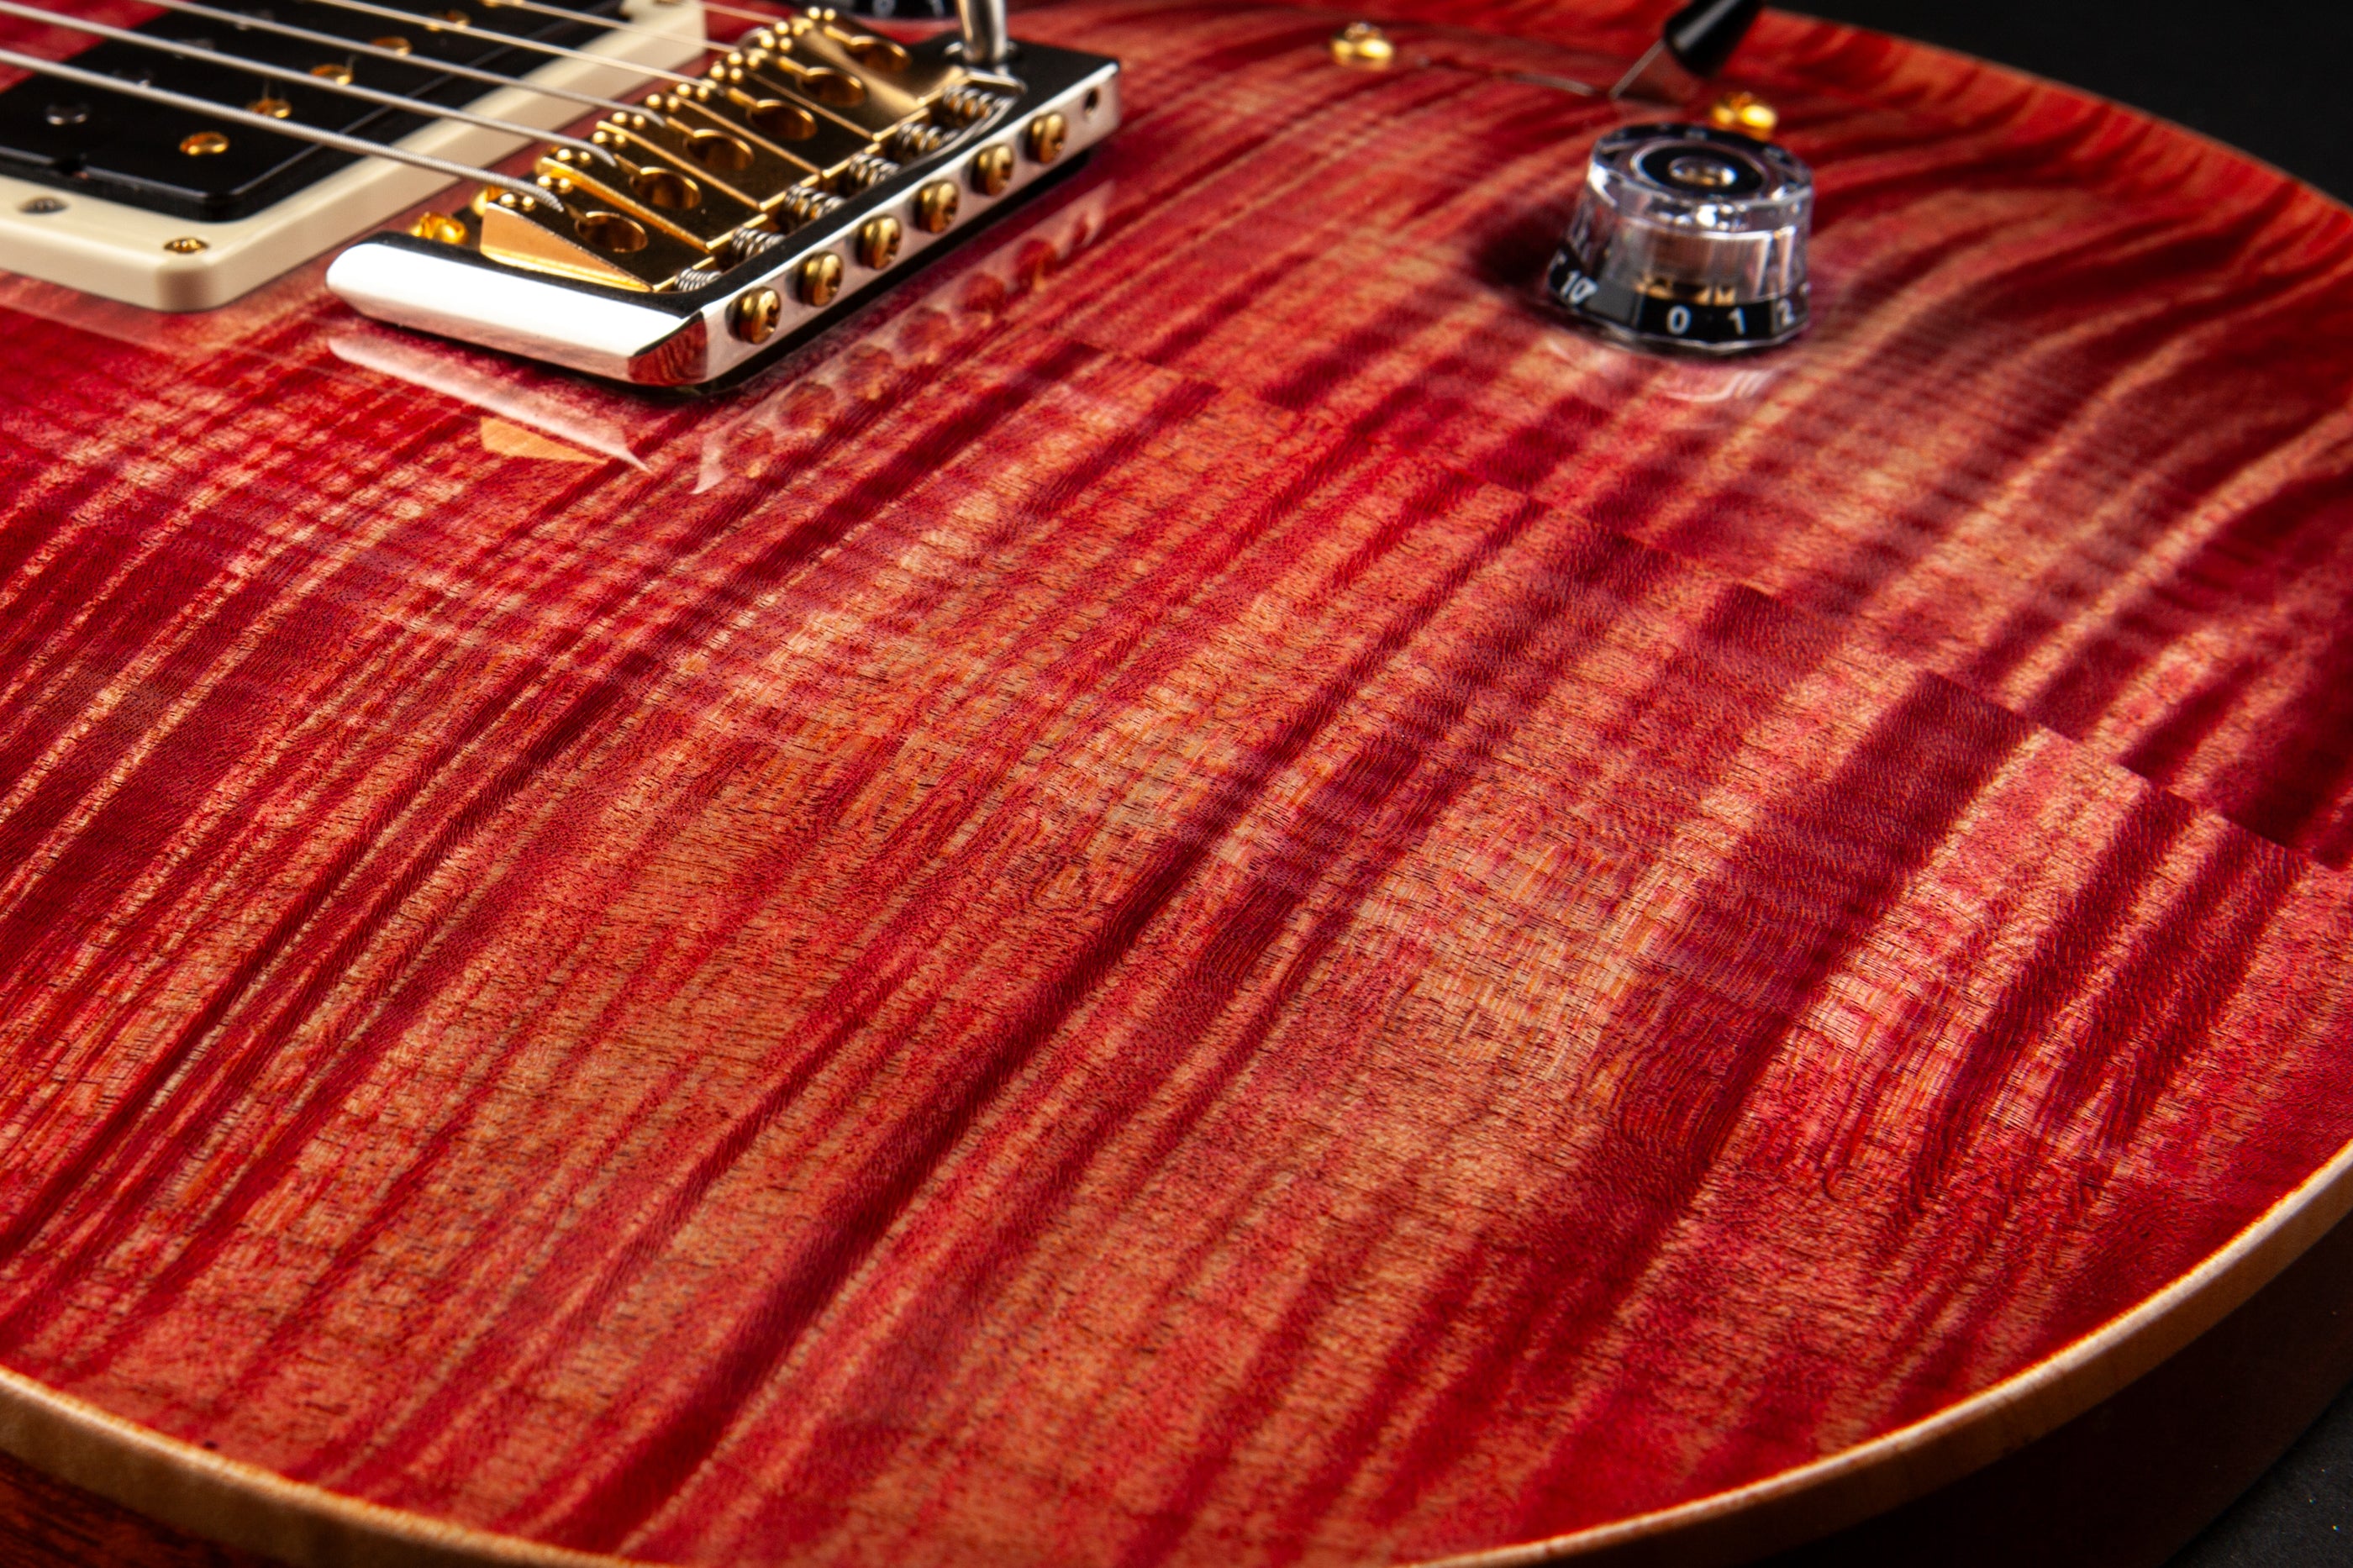 PRS Guitars : Custom 24 30th Anniversary 10-Top Violet  #213659